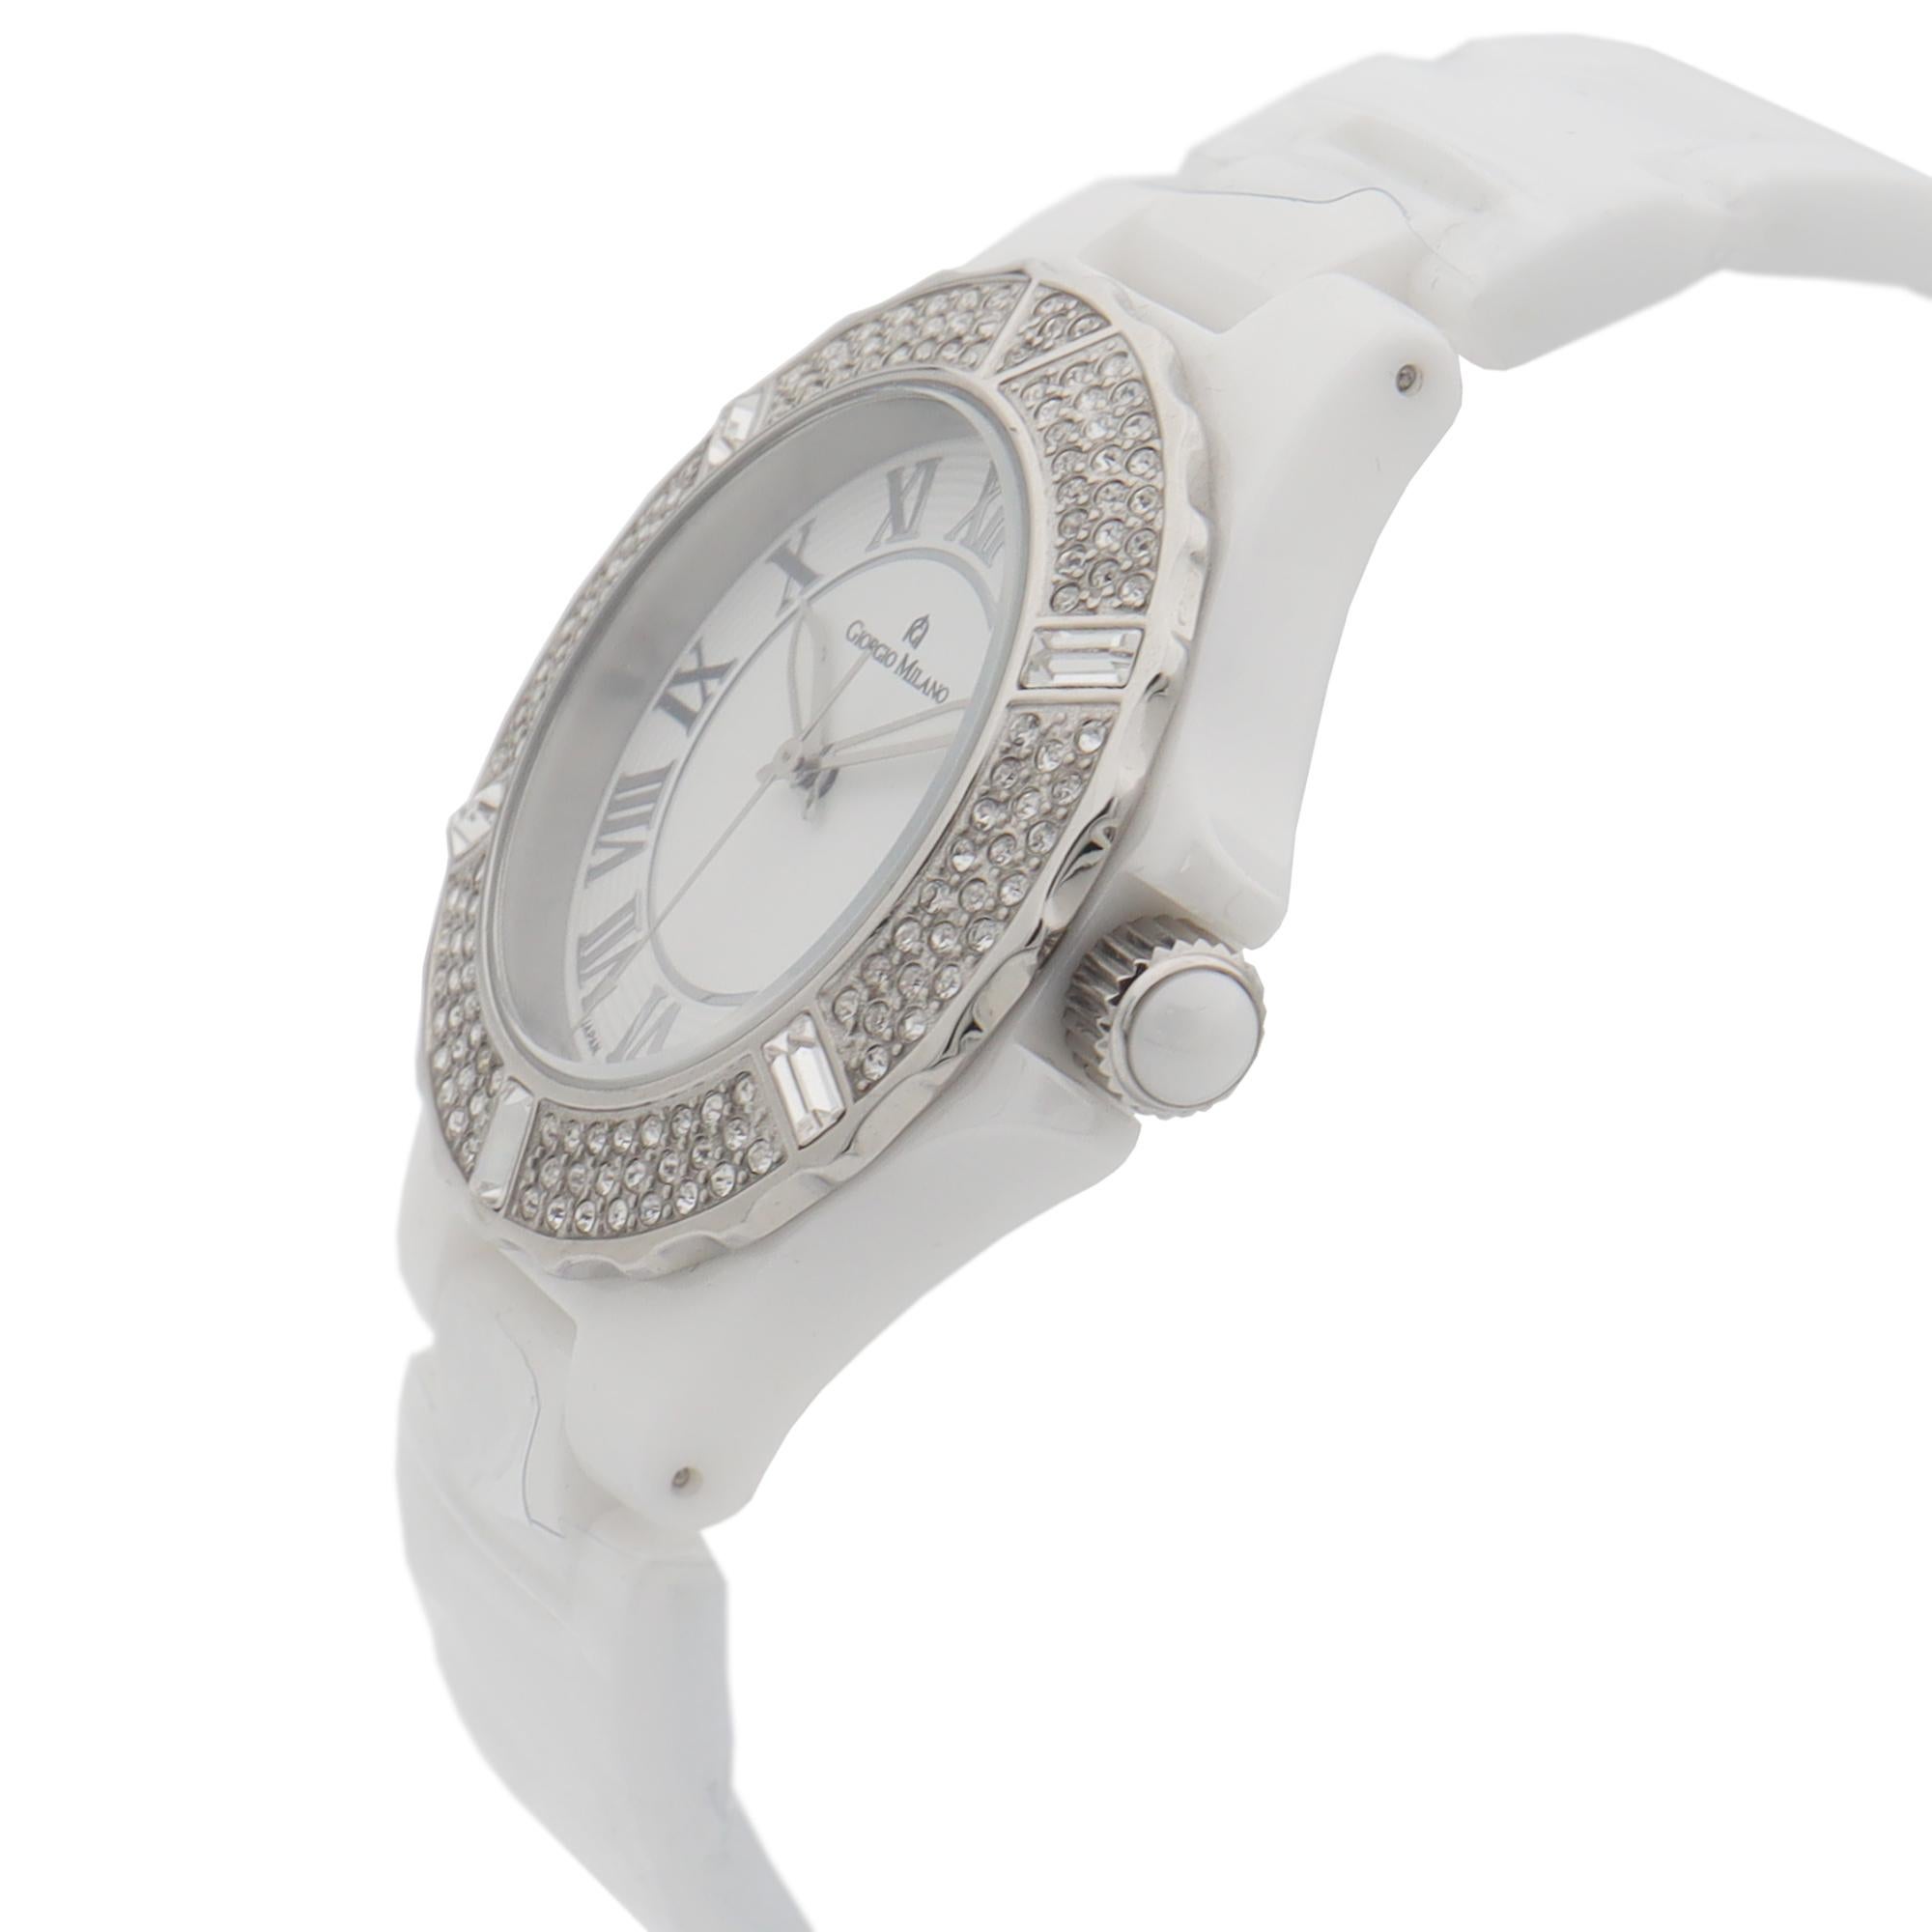 Giorgio Milano Ceramic Date White Dial Quartz Ladies Watch 863CWST01 In New Condition For Sale In New York, NY